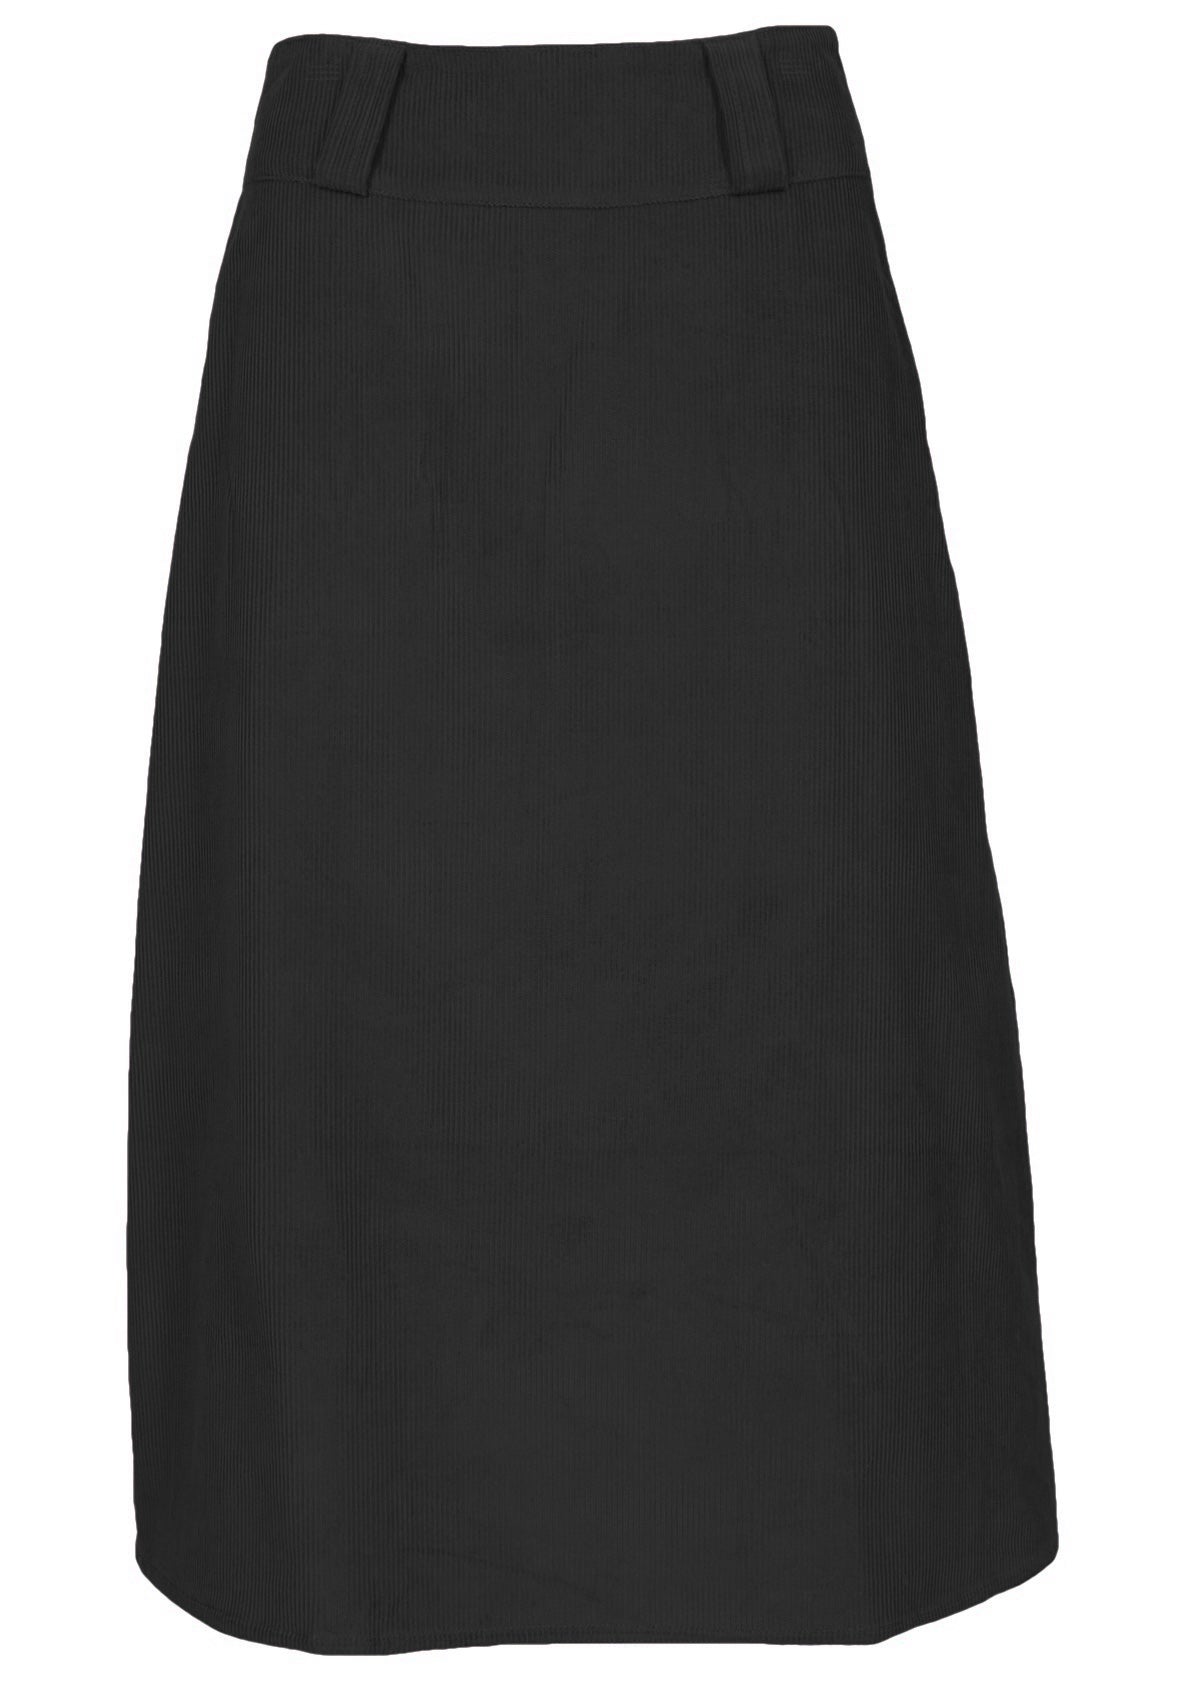 100% cotton corduroy women's skirt designed in Australia